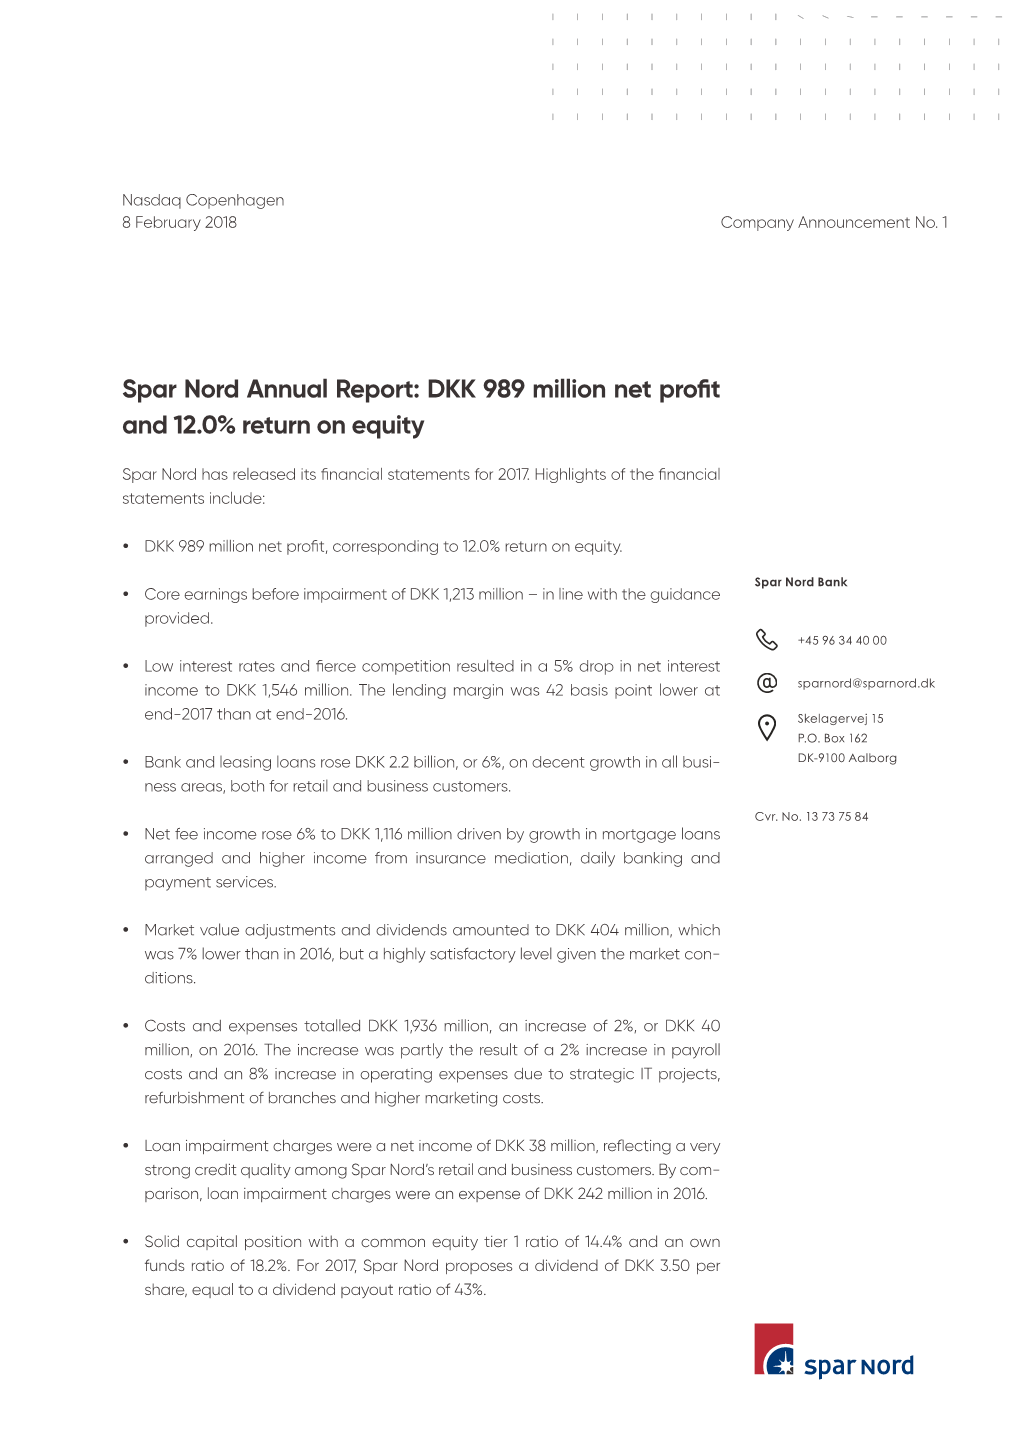 Spar Nord Annual Report: DKK 989 Million Net Profit and 12.0% Return on Equity